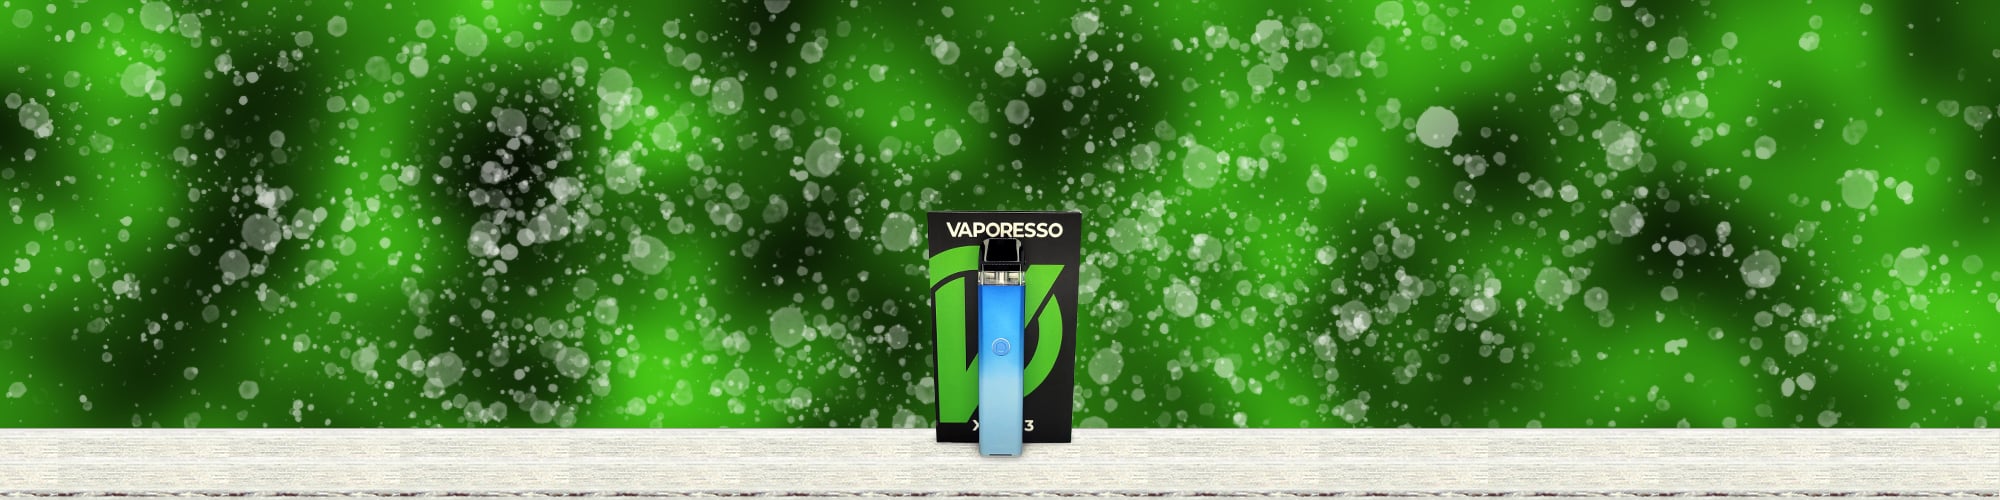 VAPORESSO XROS 3 Review Main Banner